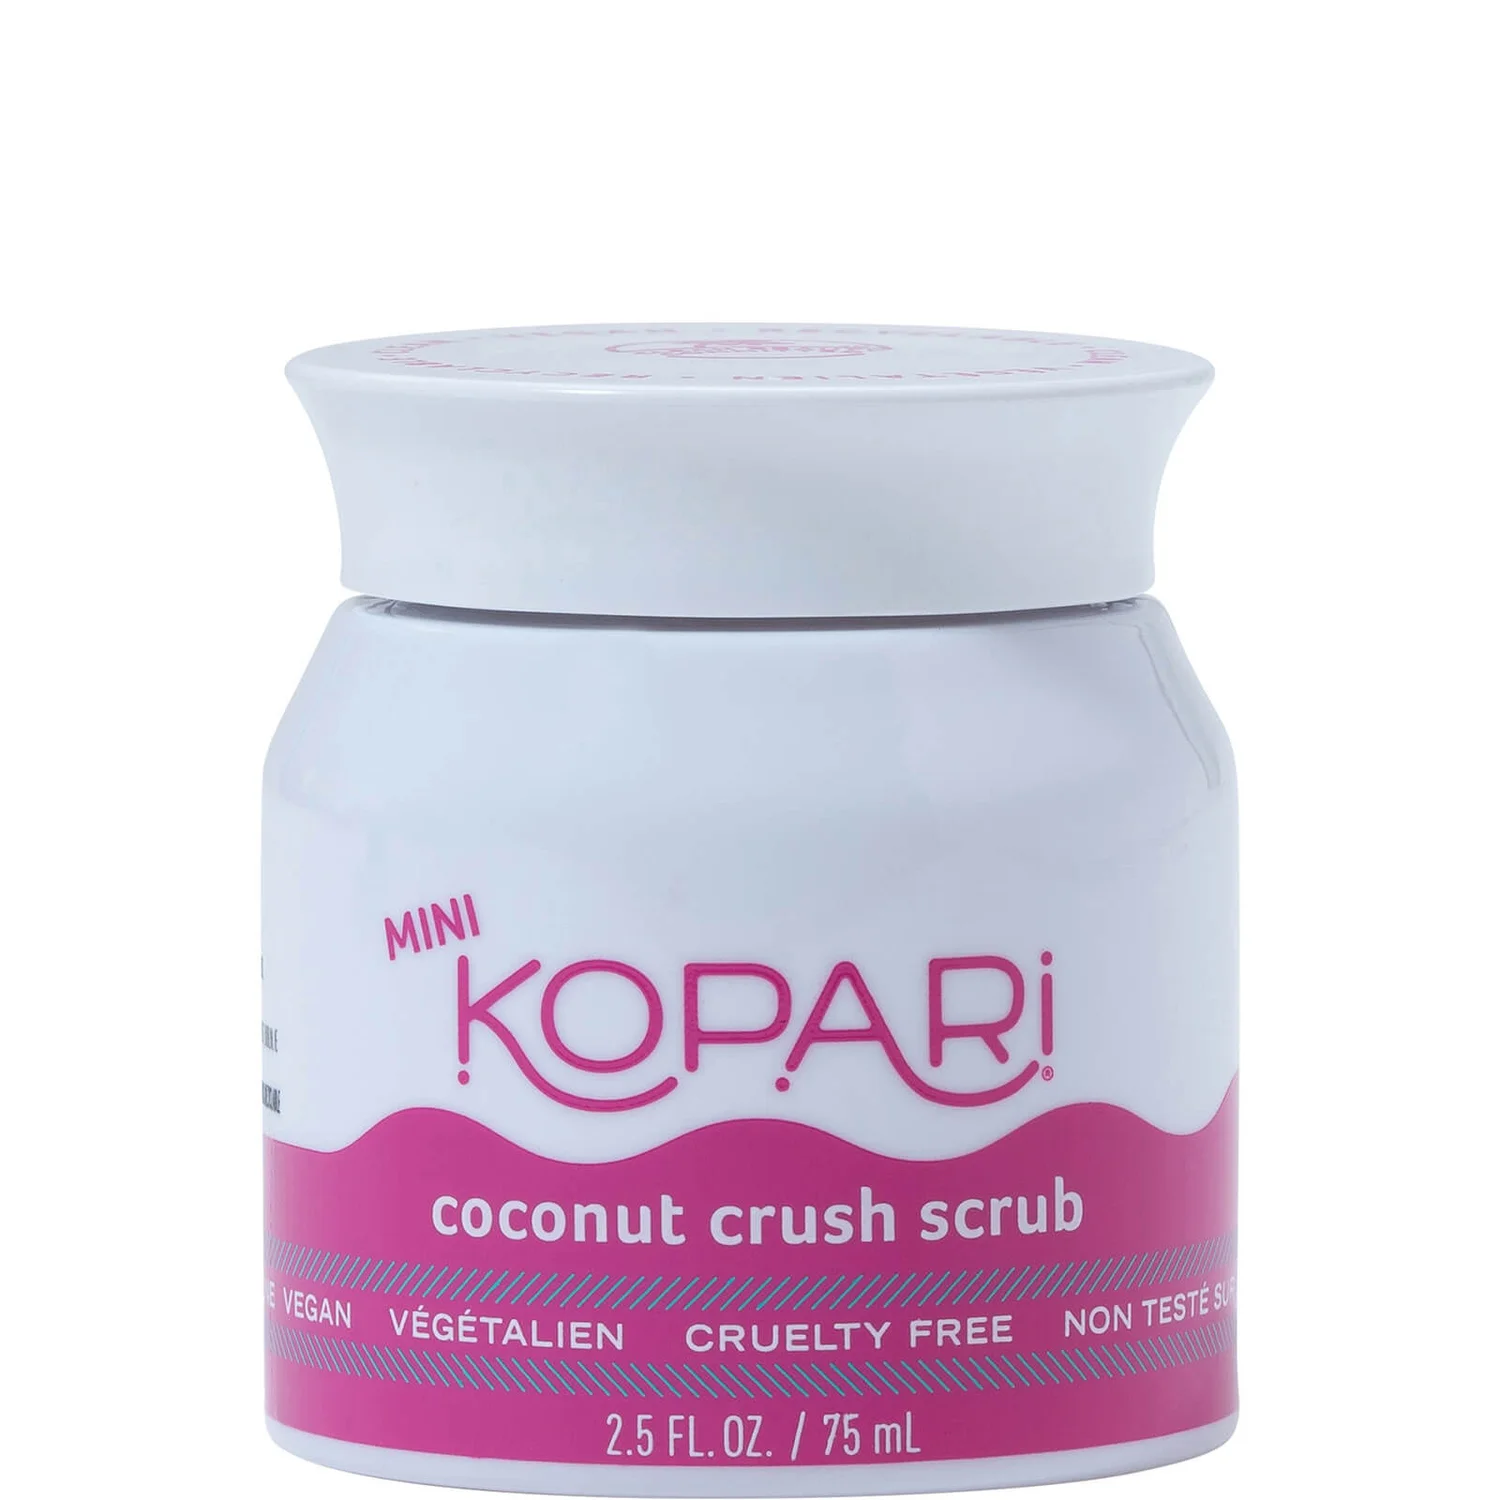 cultbeauty.co.uk | Kopari Beauty Vegan Coconut Crush Scrub